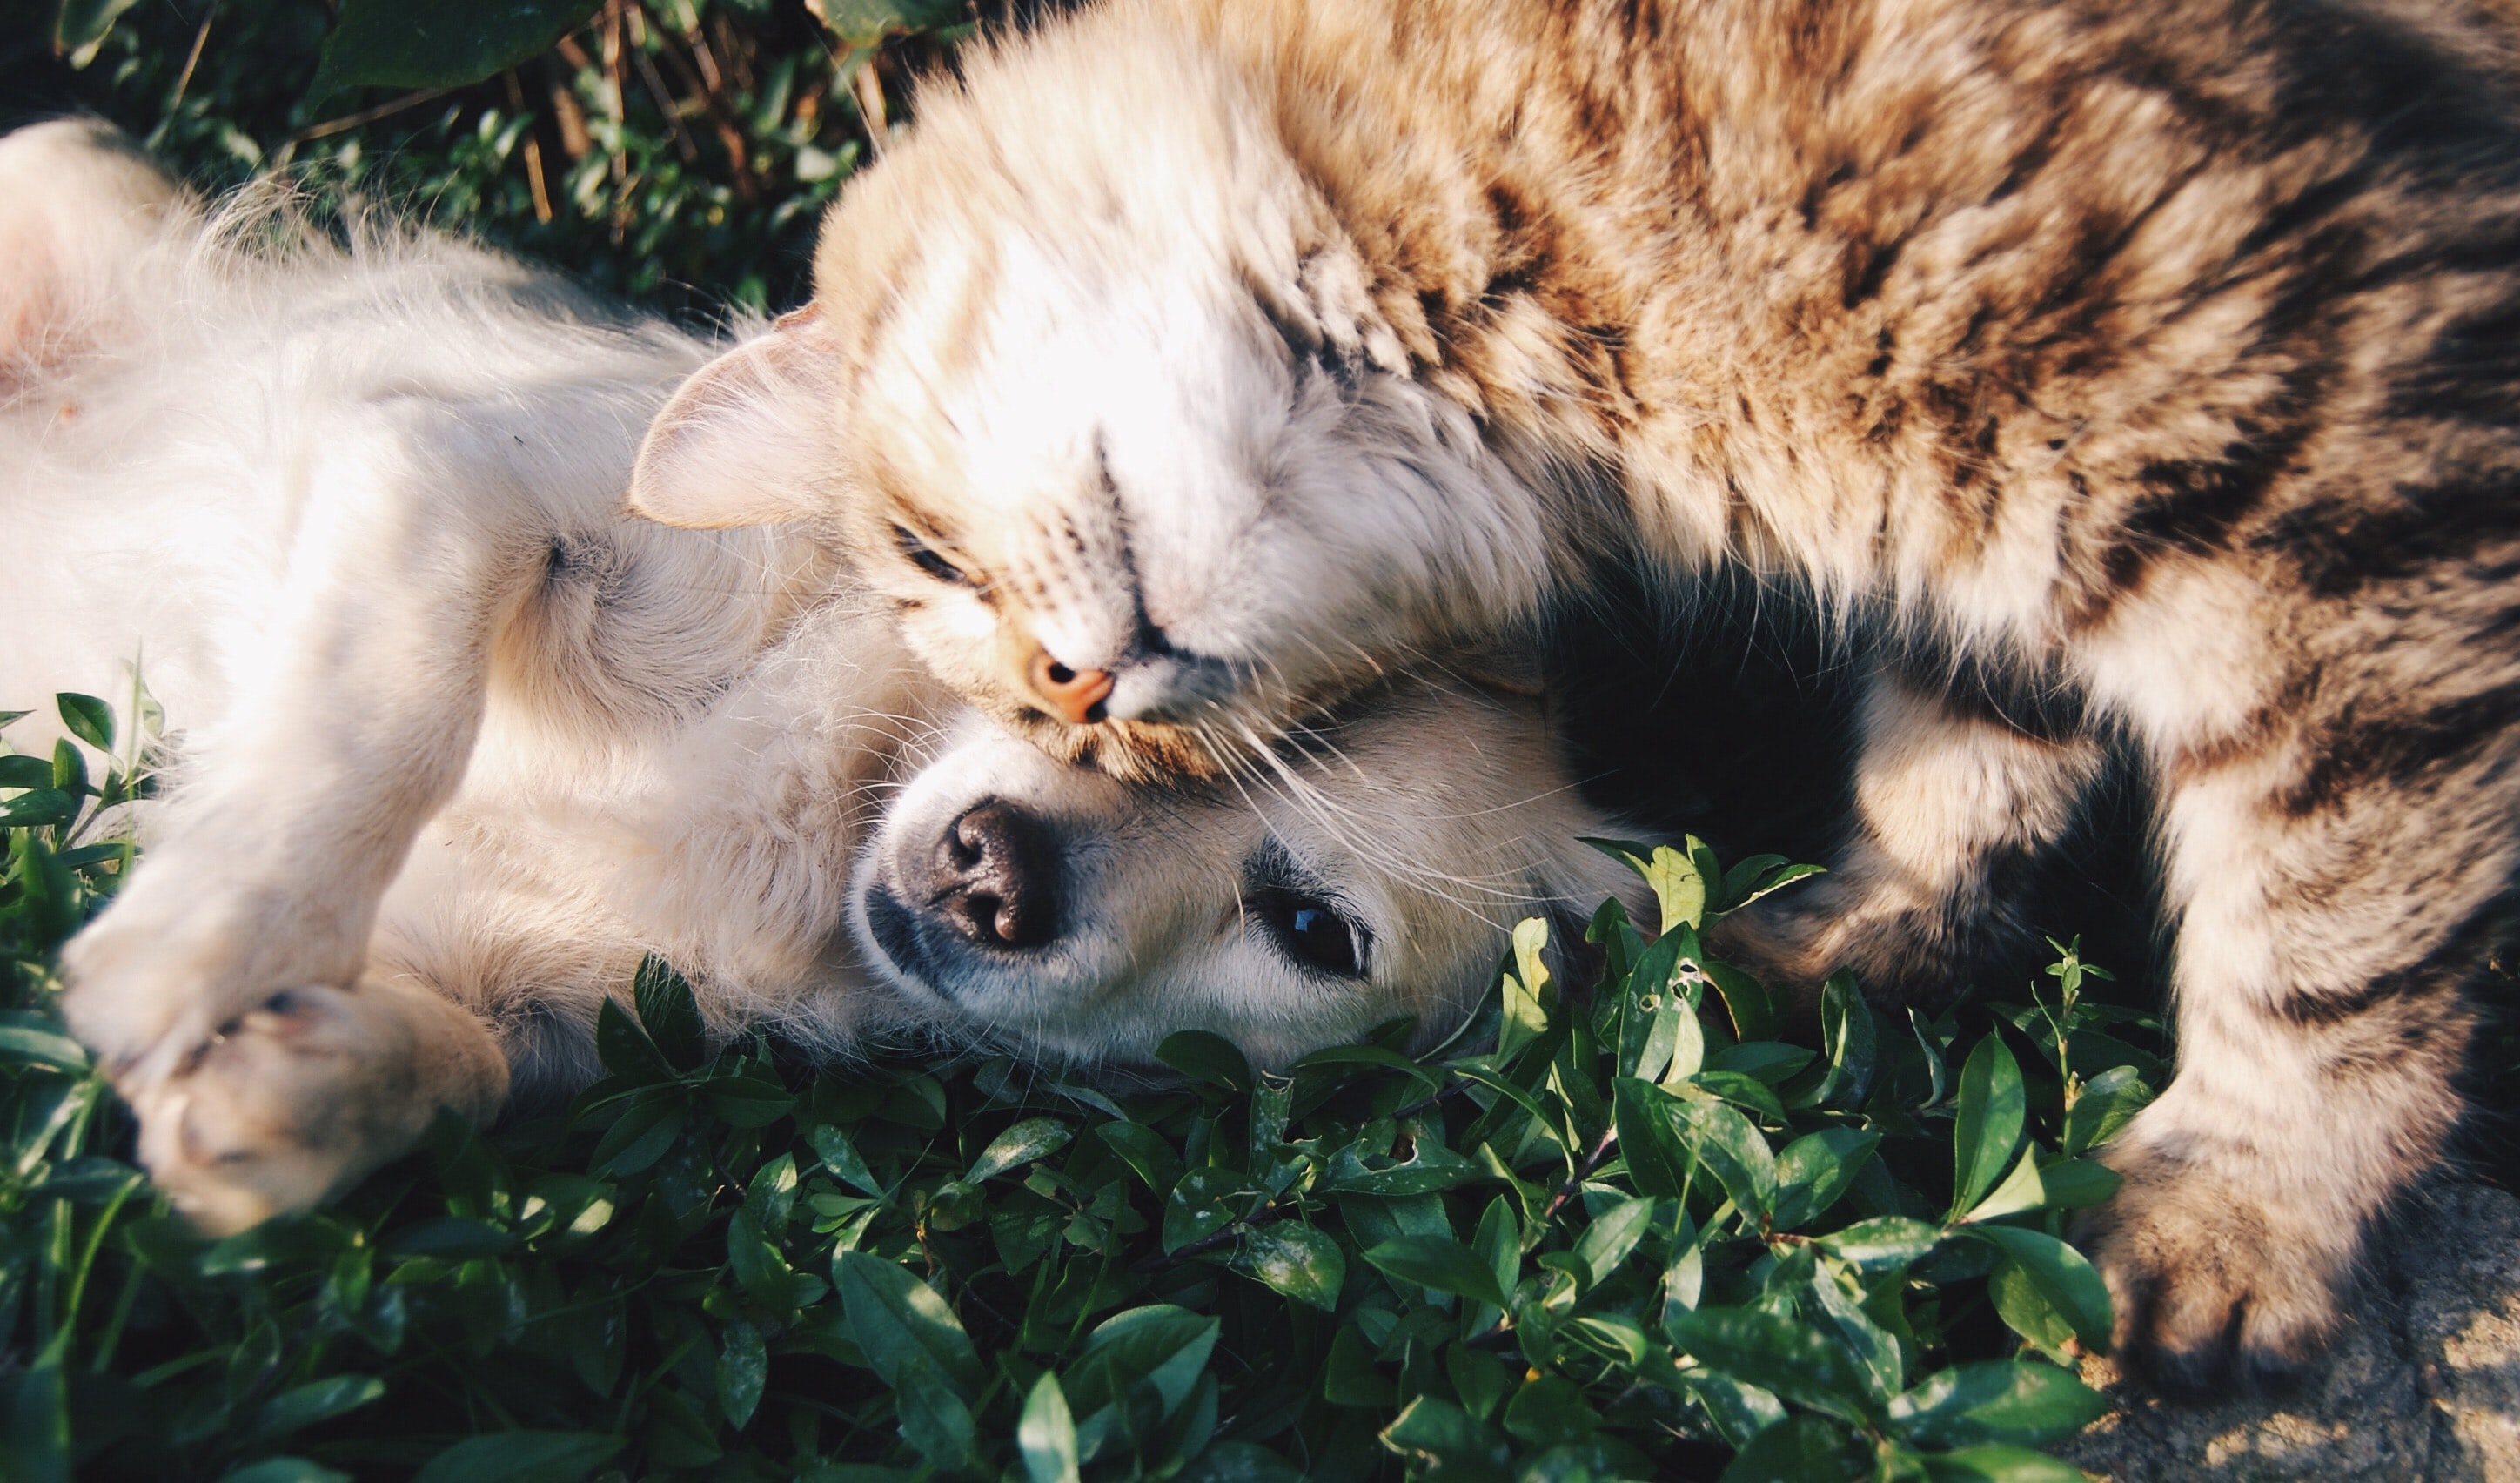 Cat and dog cuddling